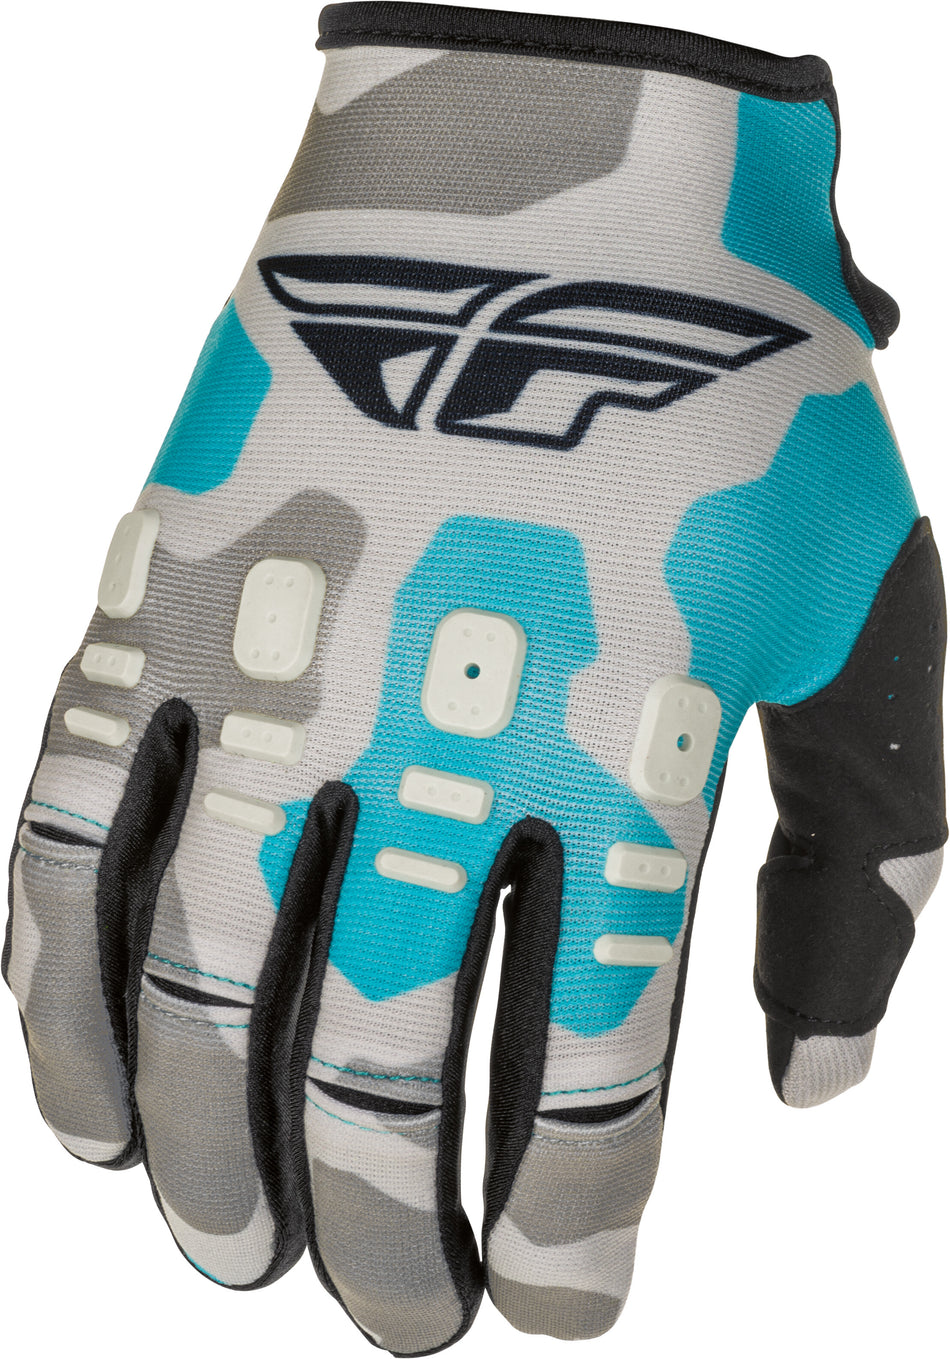 FLY RACING Kinetic K221 Gloves Grey/Blue Sz 07 374-51607